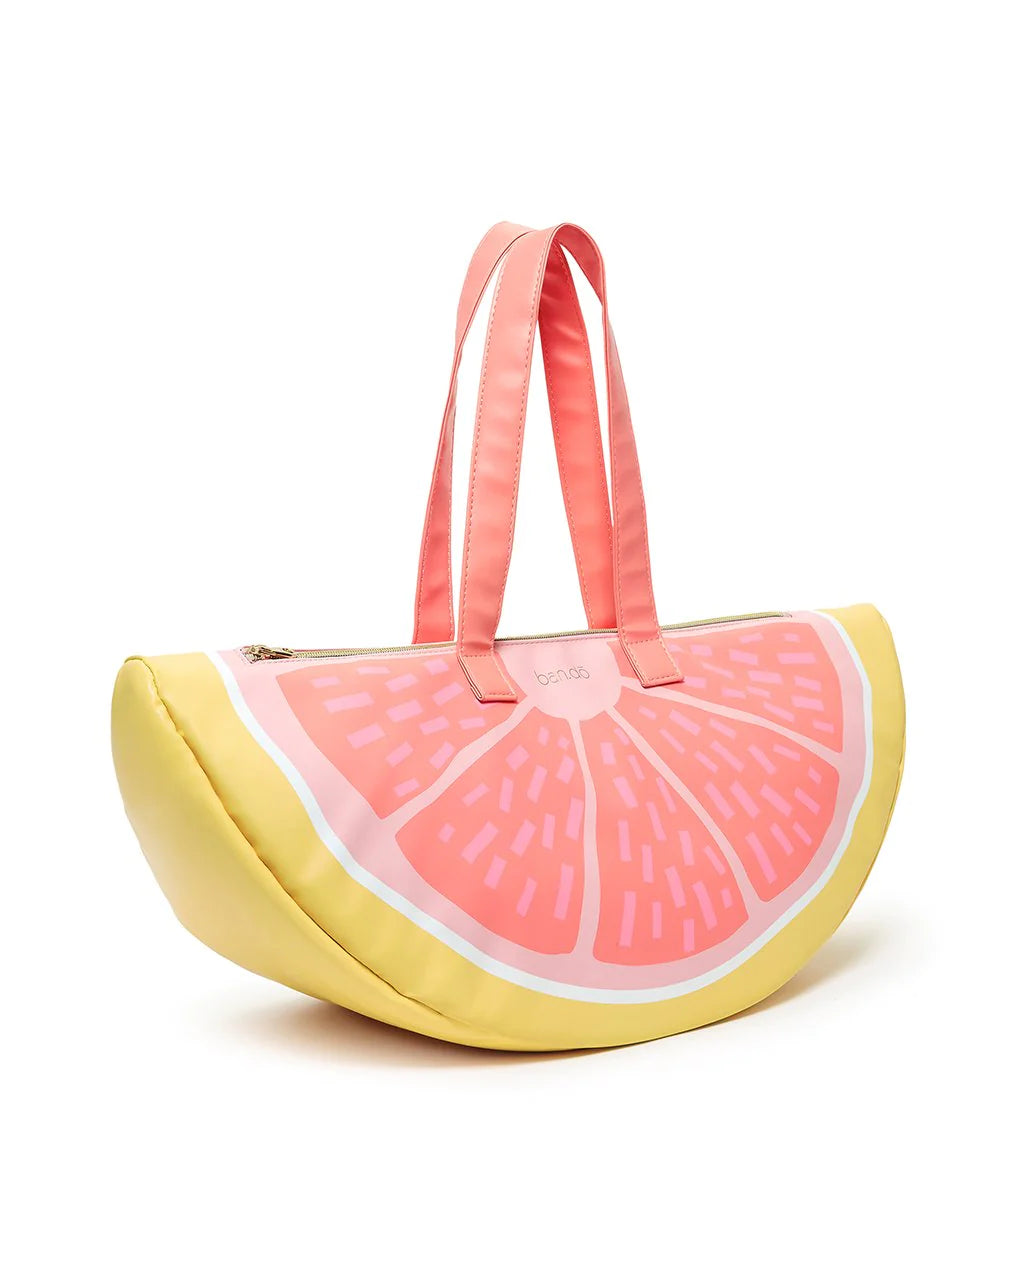 Super Chill Cooler Bag in Grapefruit